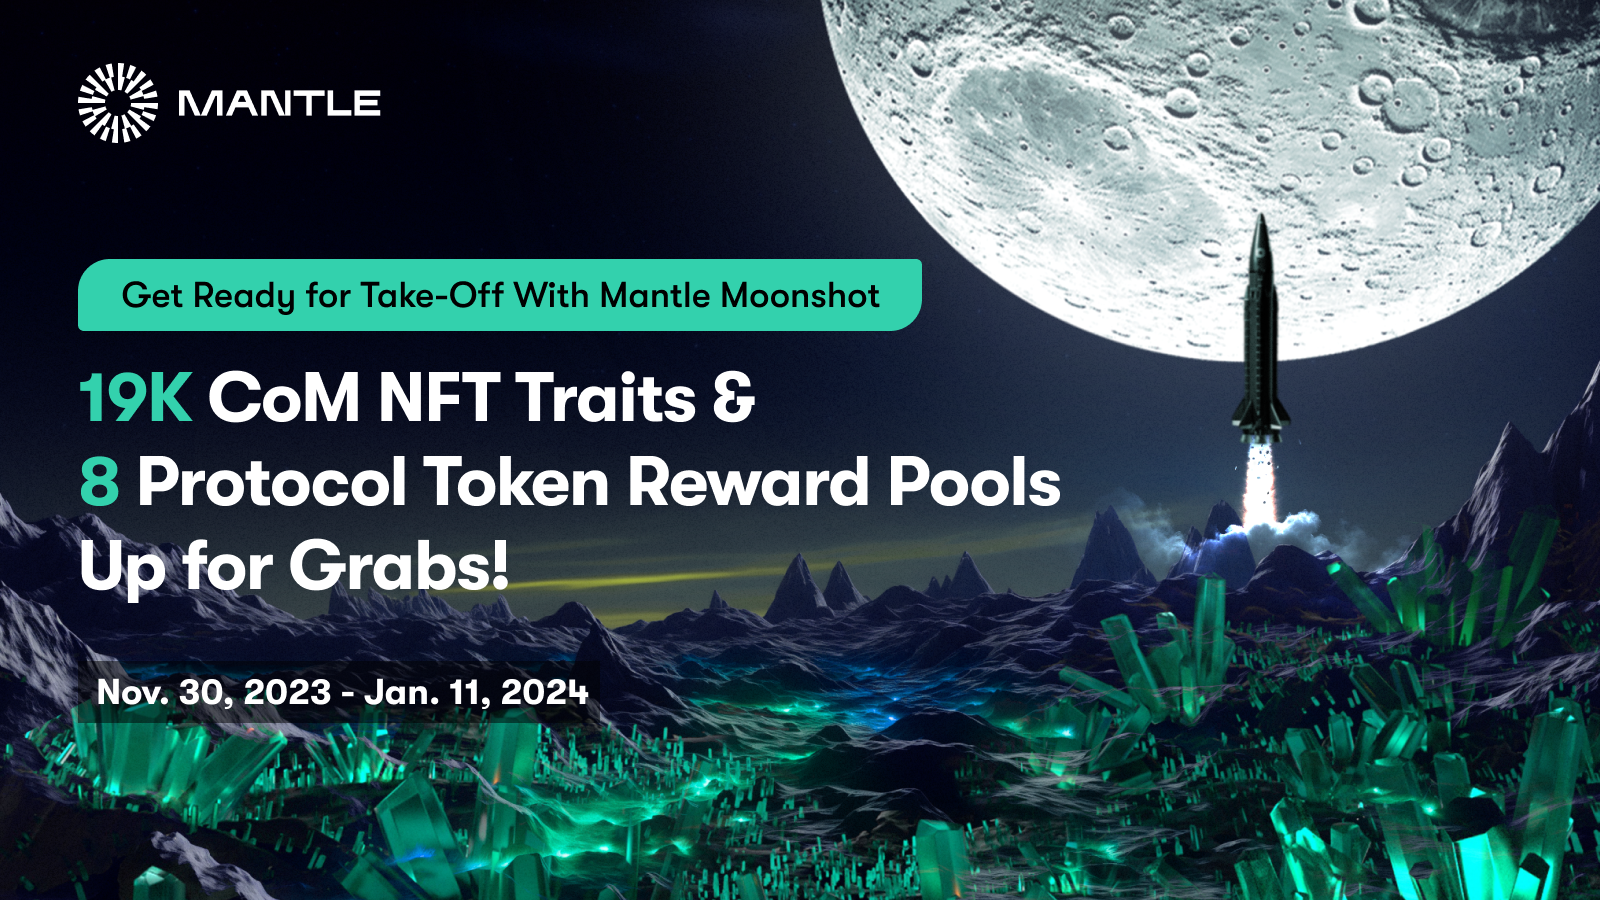 Mantle Moonshot: Win 19K CoM NFT Traits & Protocol Tokens!